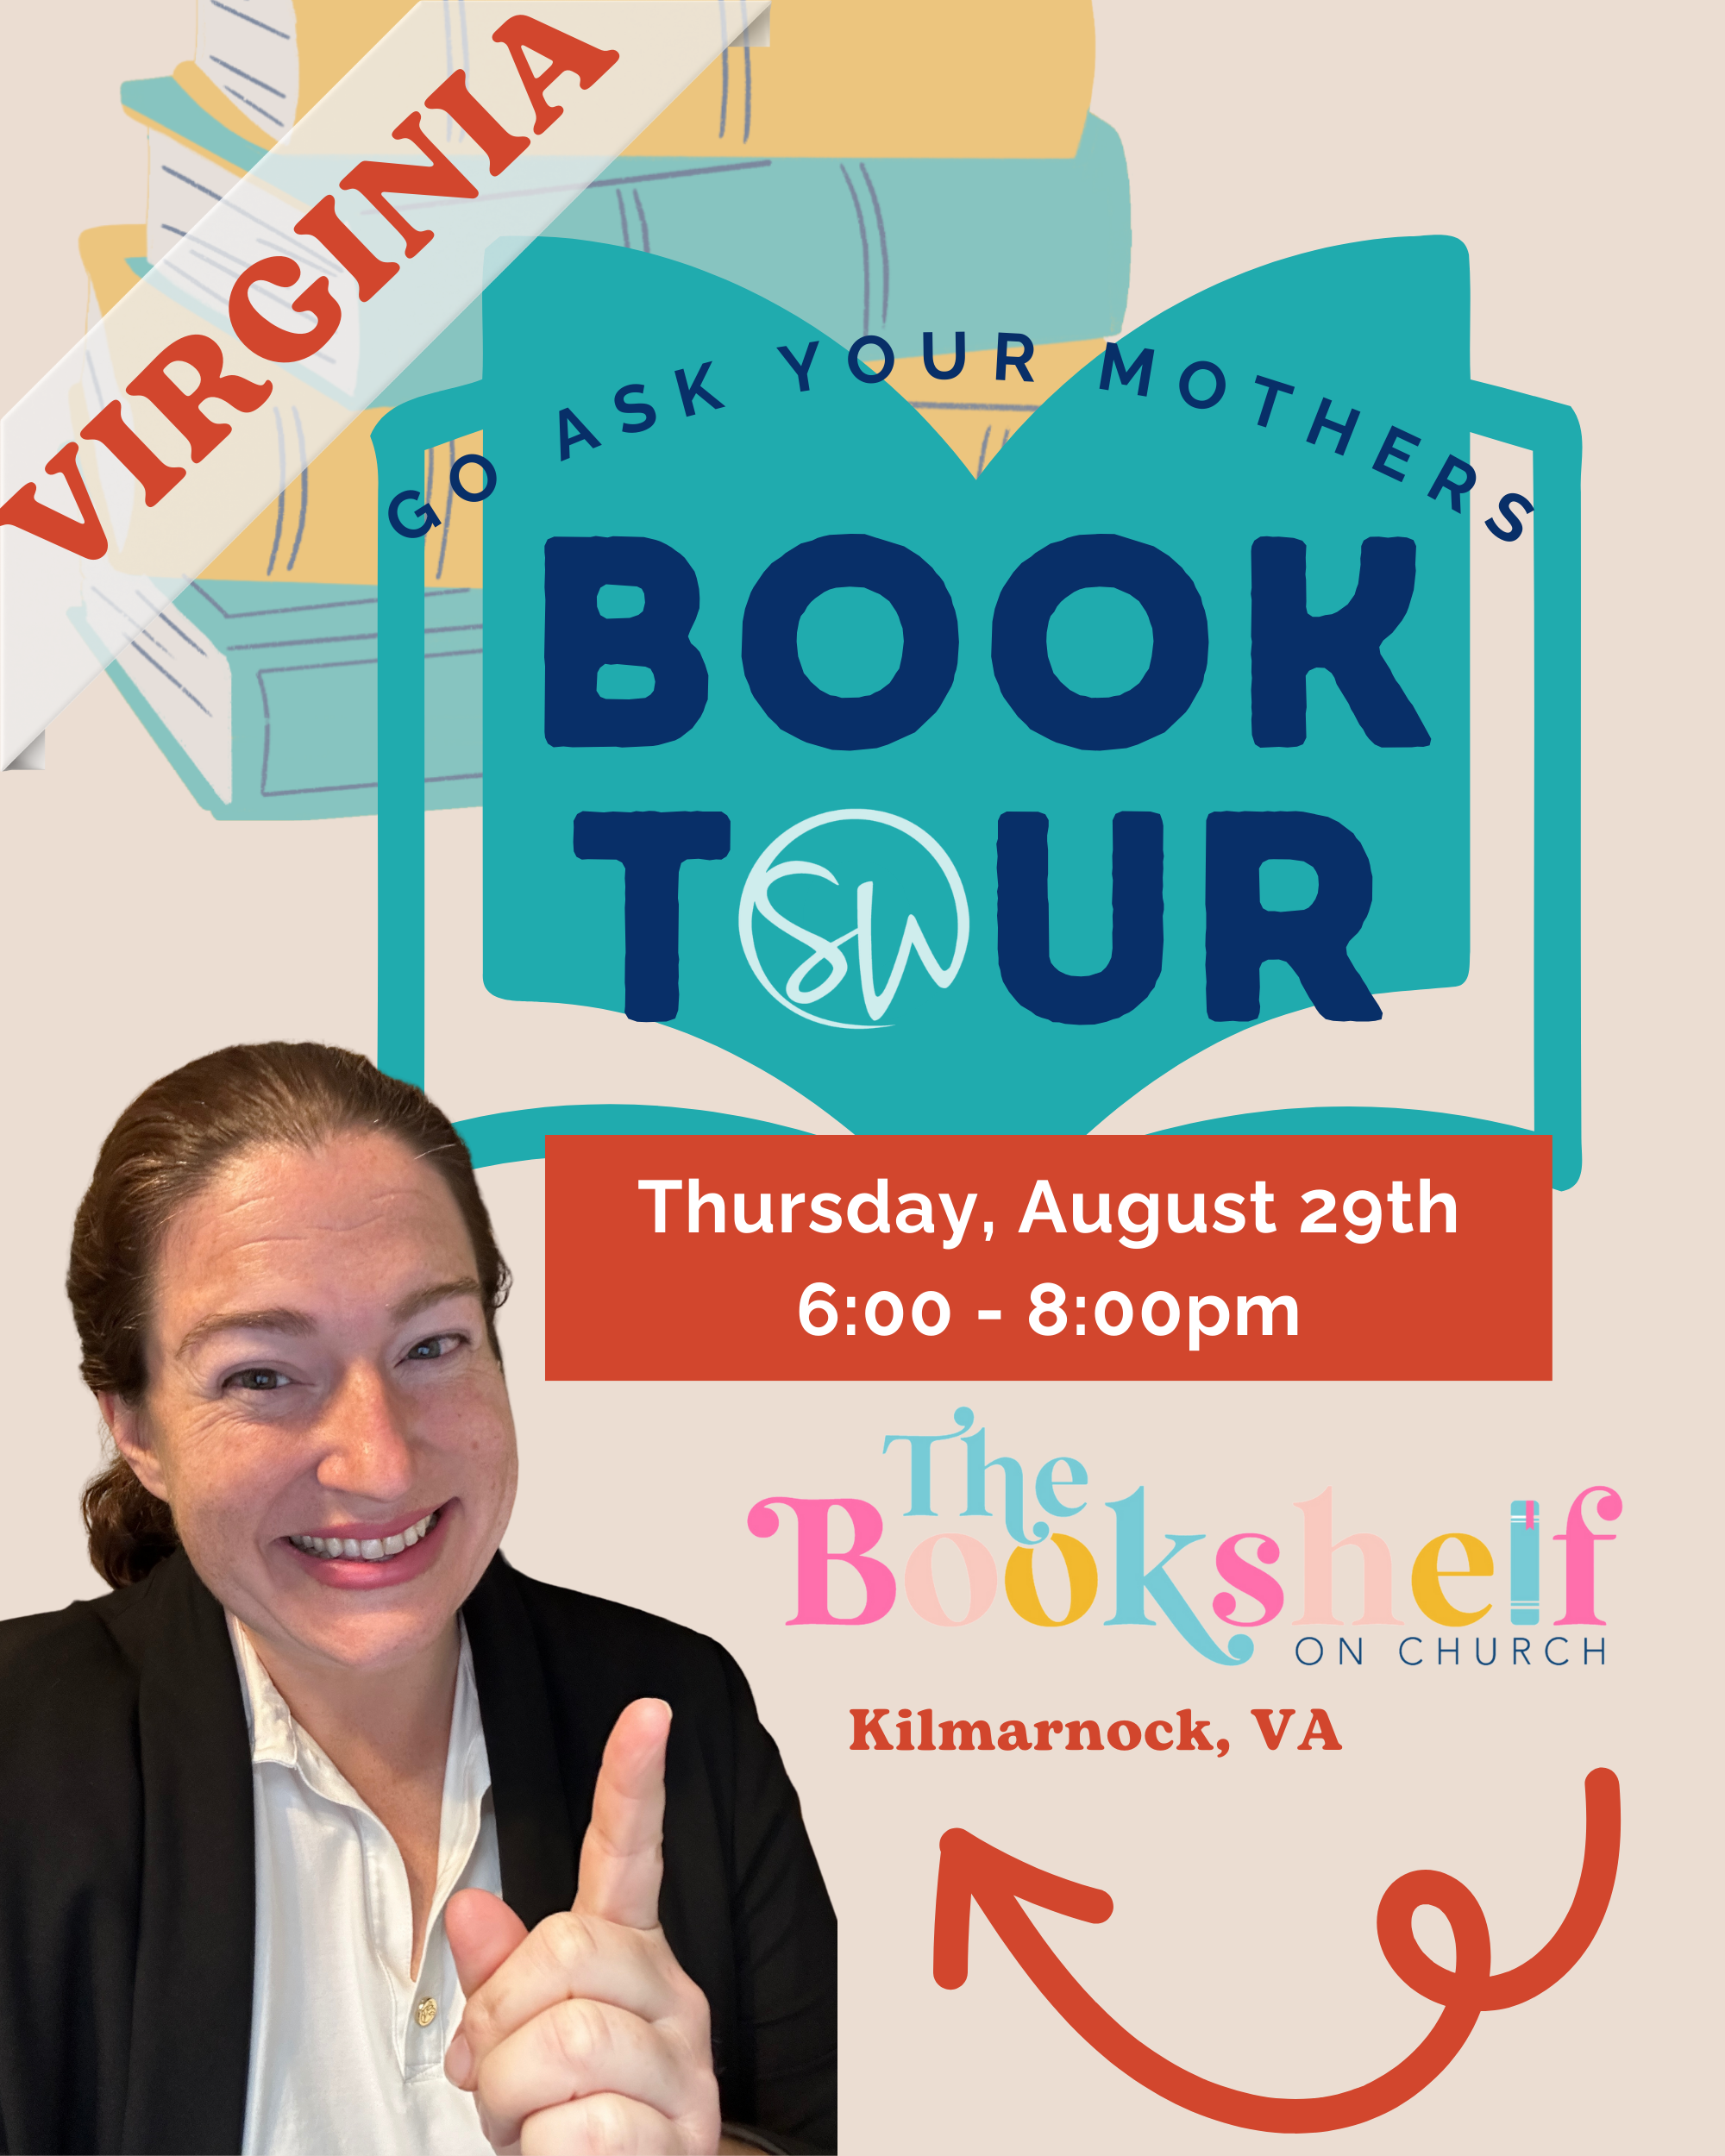 Kilmarnock, VA - August 29th @ 6pm Author Event - Ticket